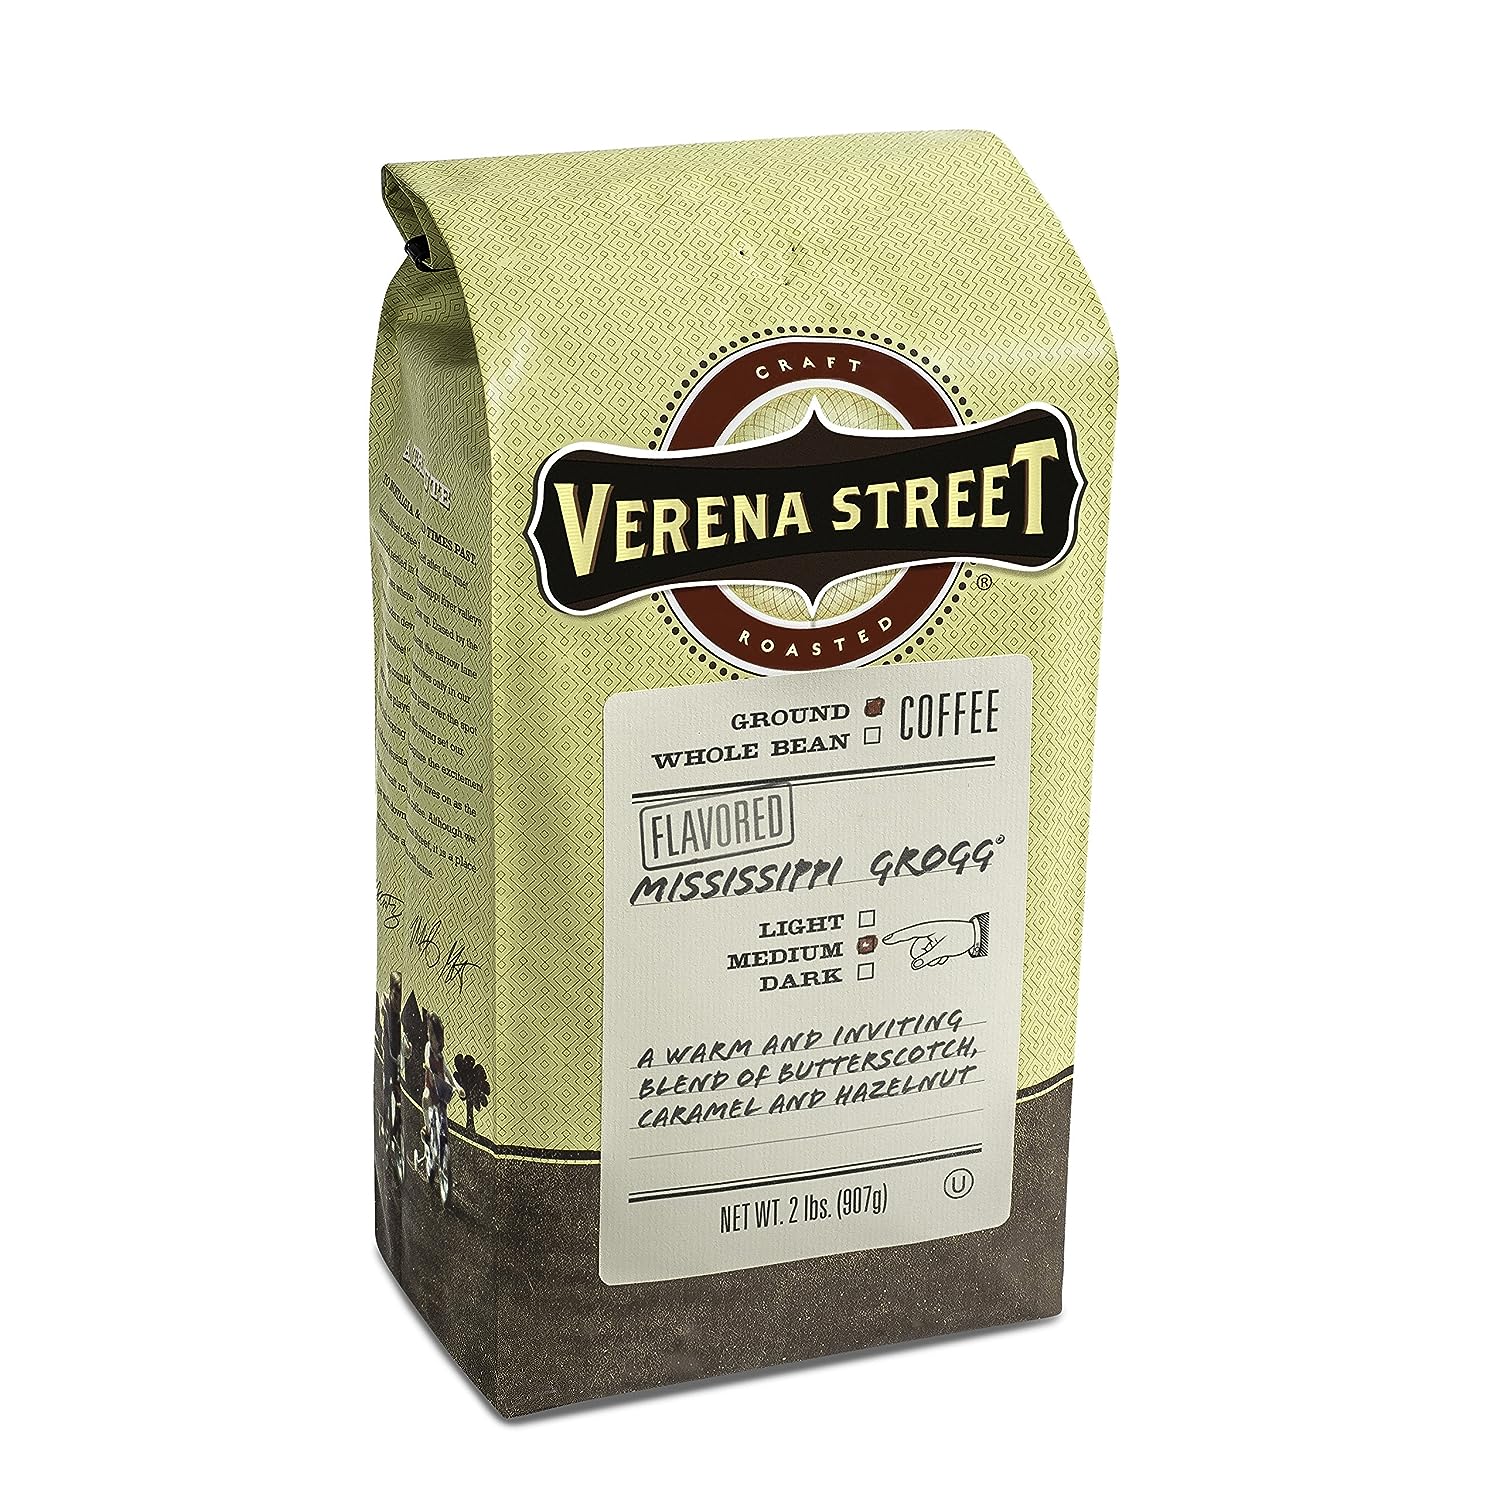 Verena Street, Flavored Ground Coffee, Mississippi Grogg, Medium Roast, Rainforest Alliance Certified Arabica Coffee